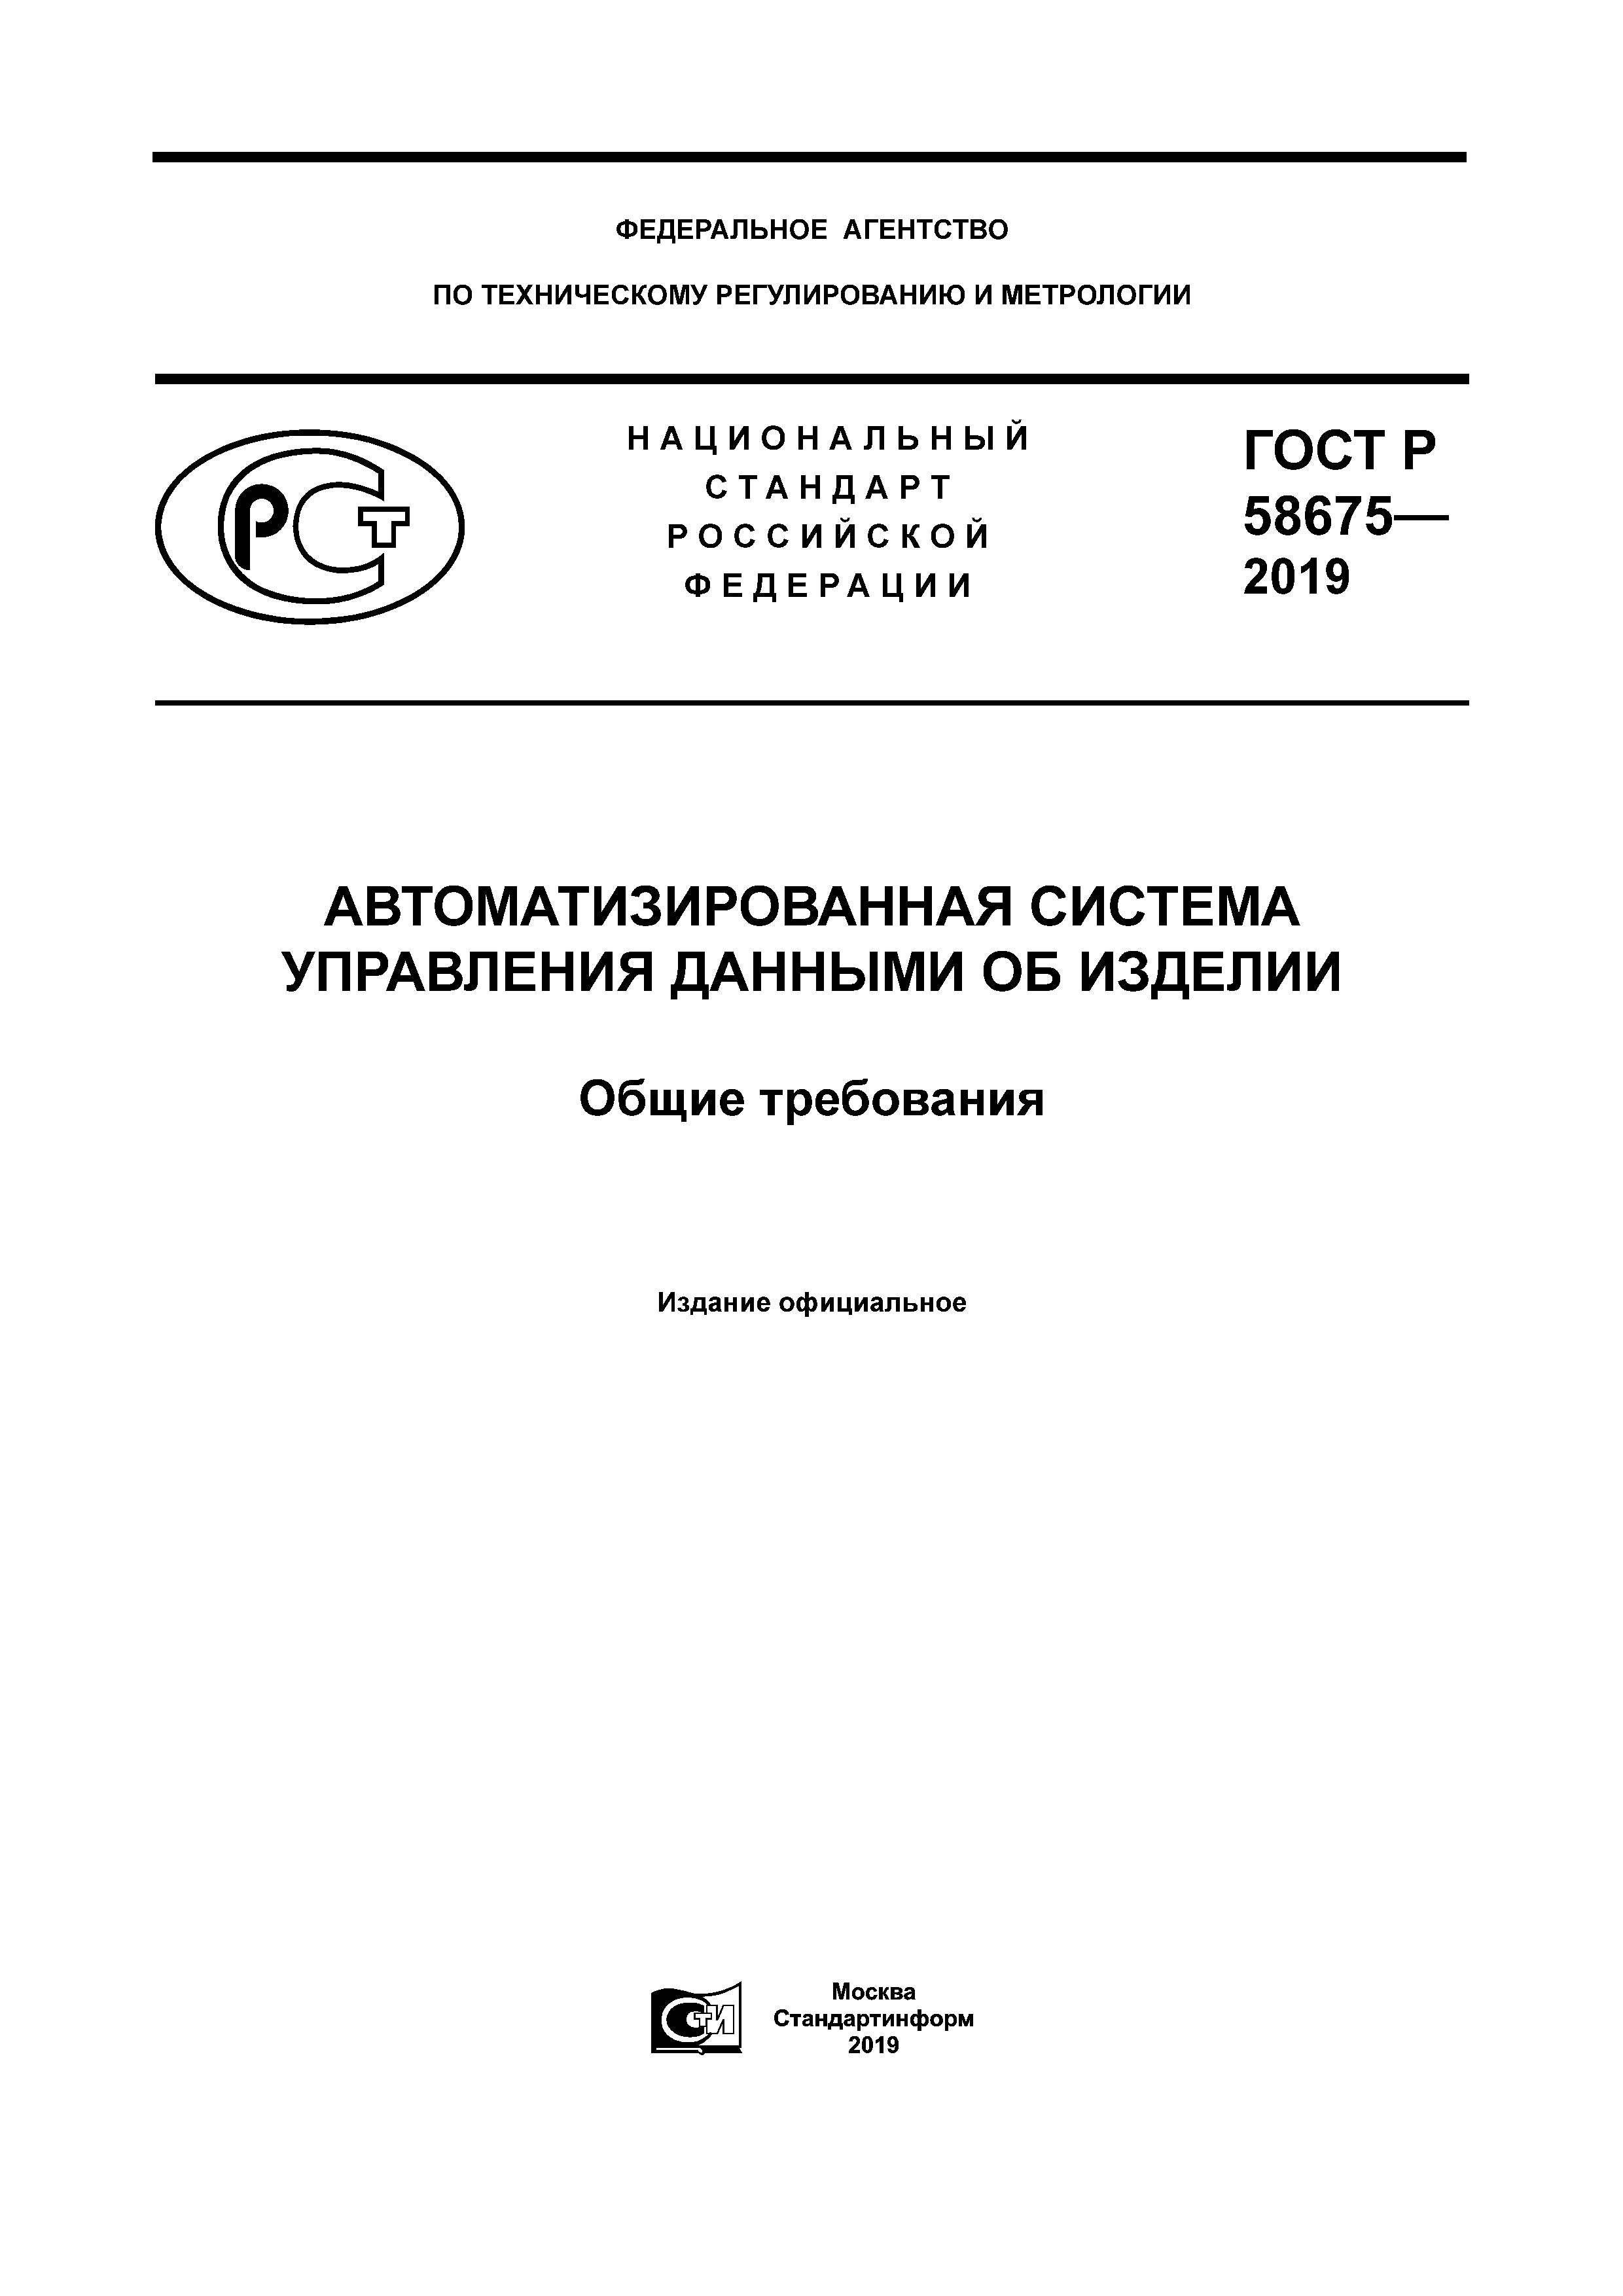 ГОСТ Р 58675-2019